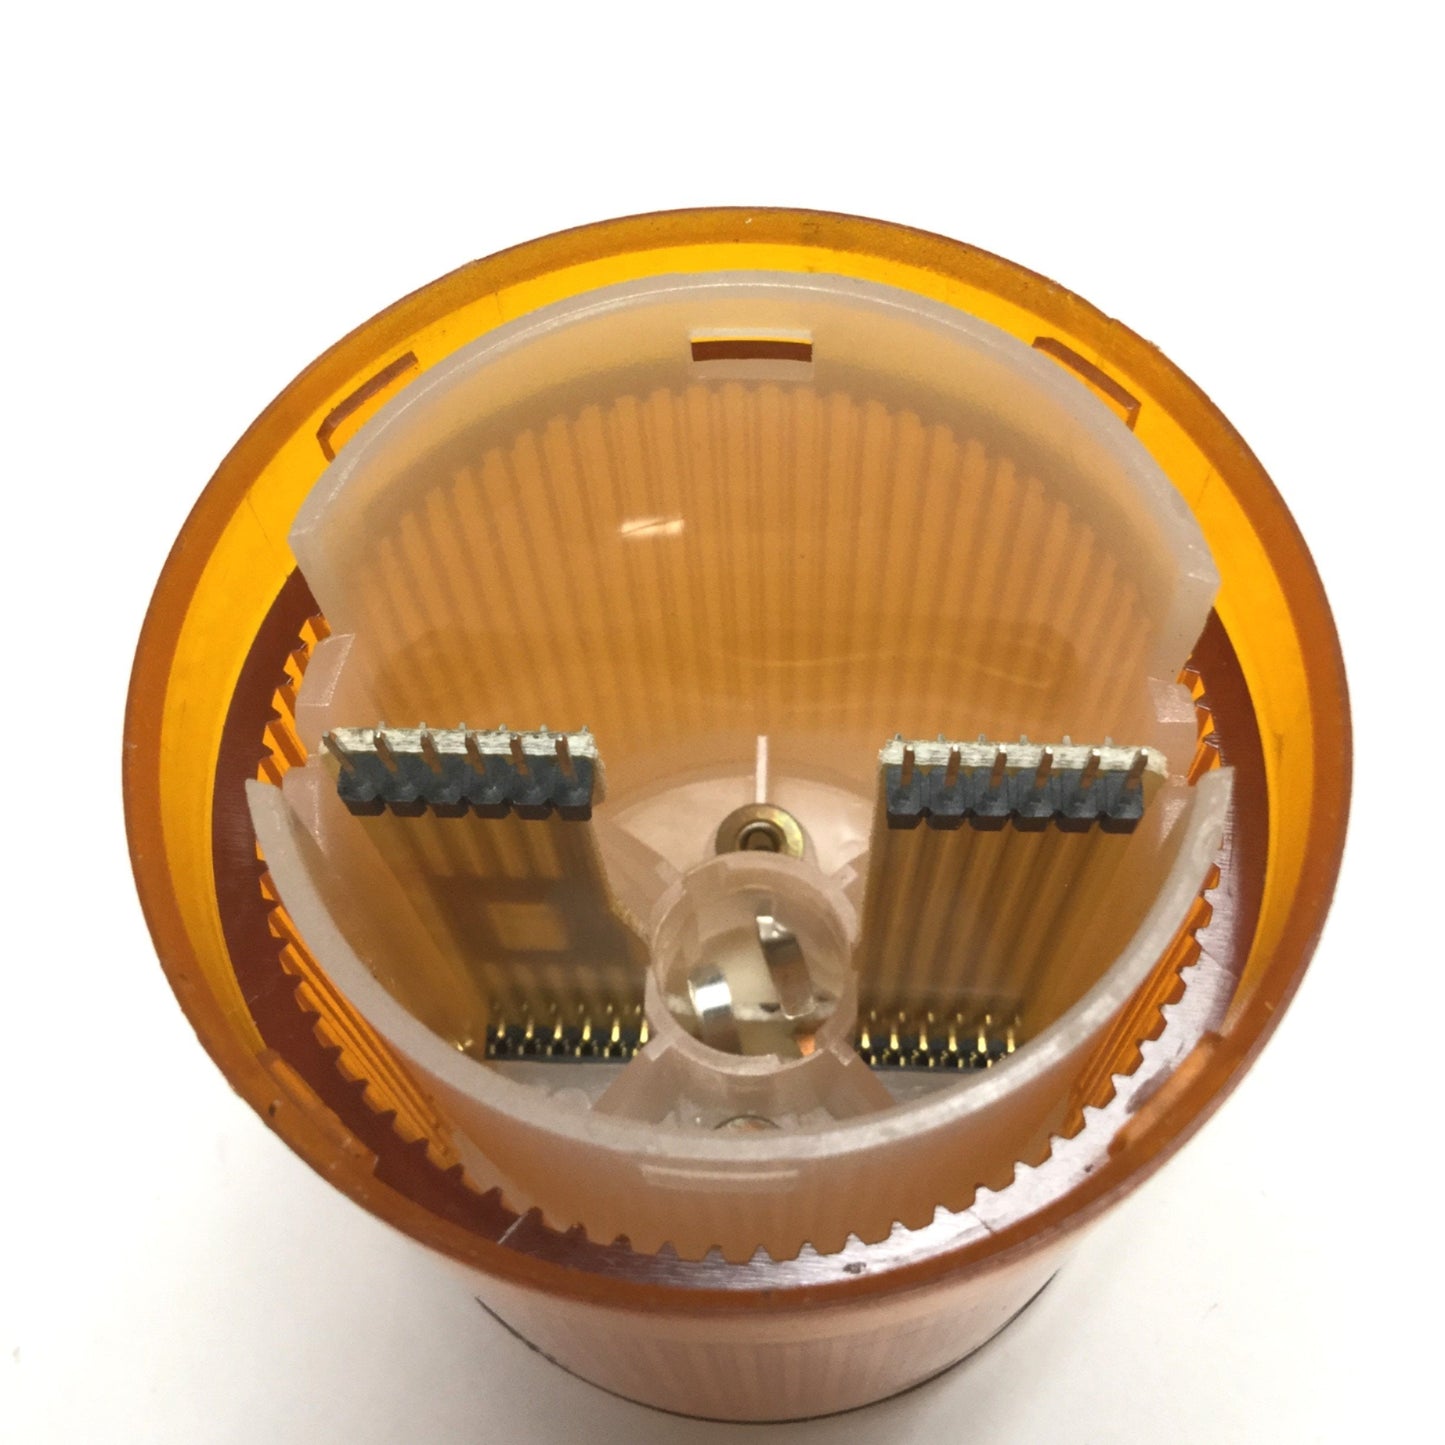 Used Eaton E26B9 Amber Stack Tower Light Module Incandescent *No Bulb* 250V 6W Max